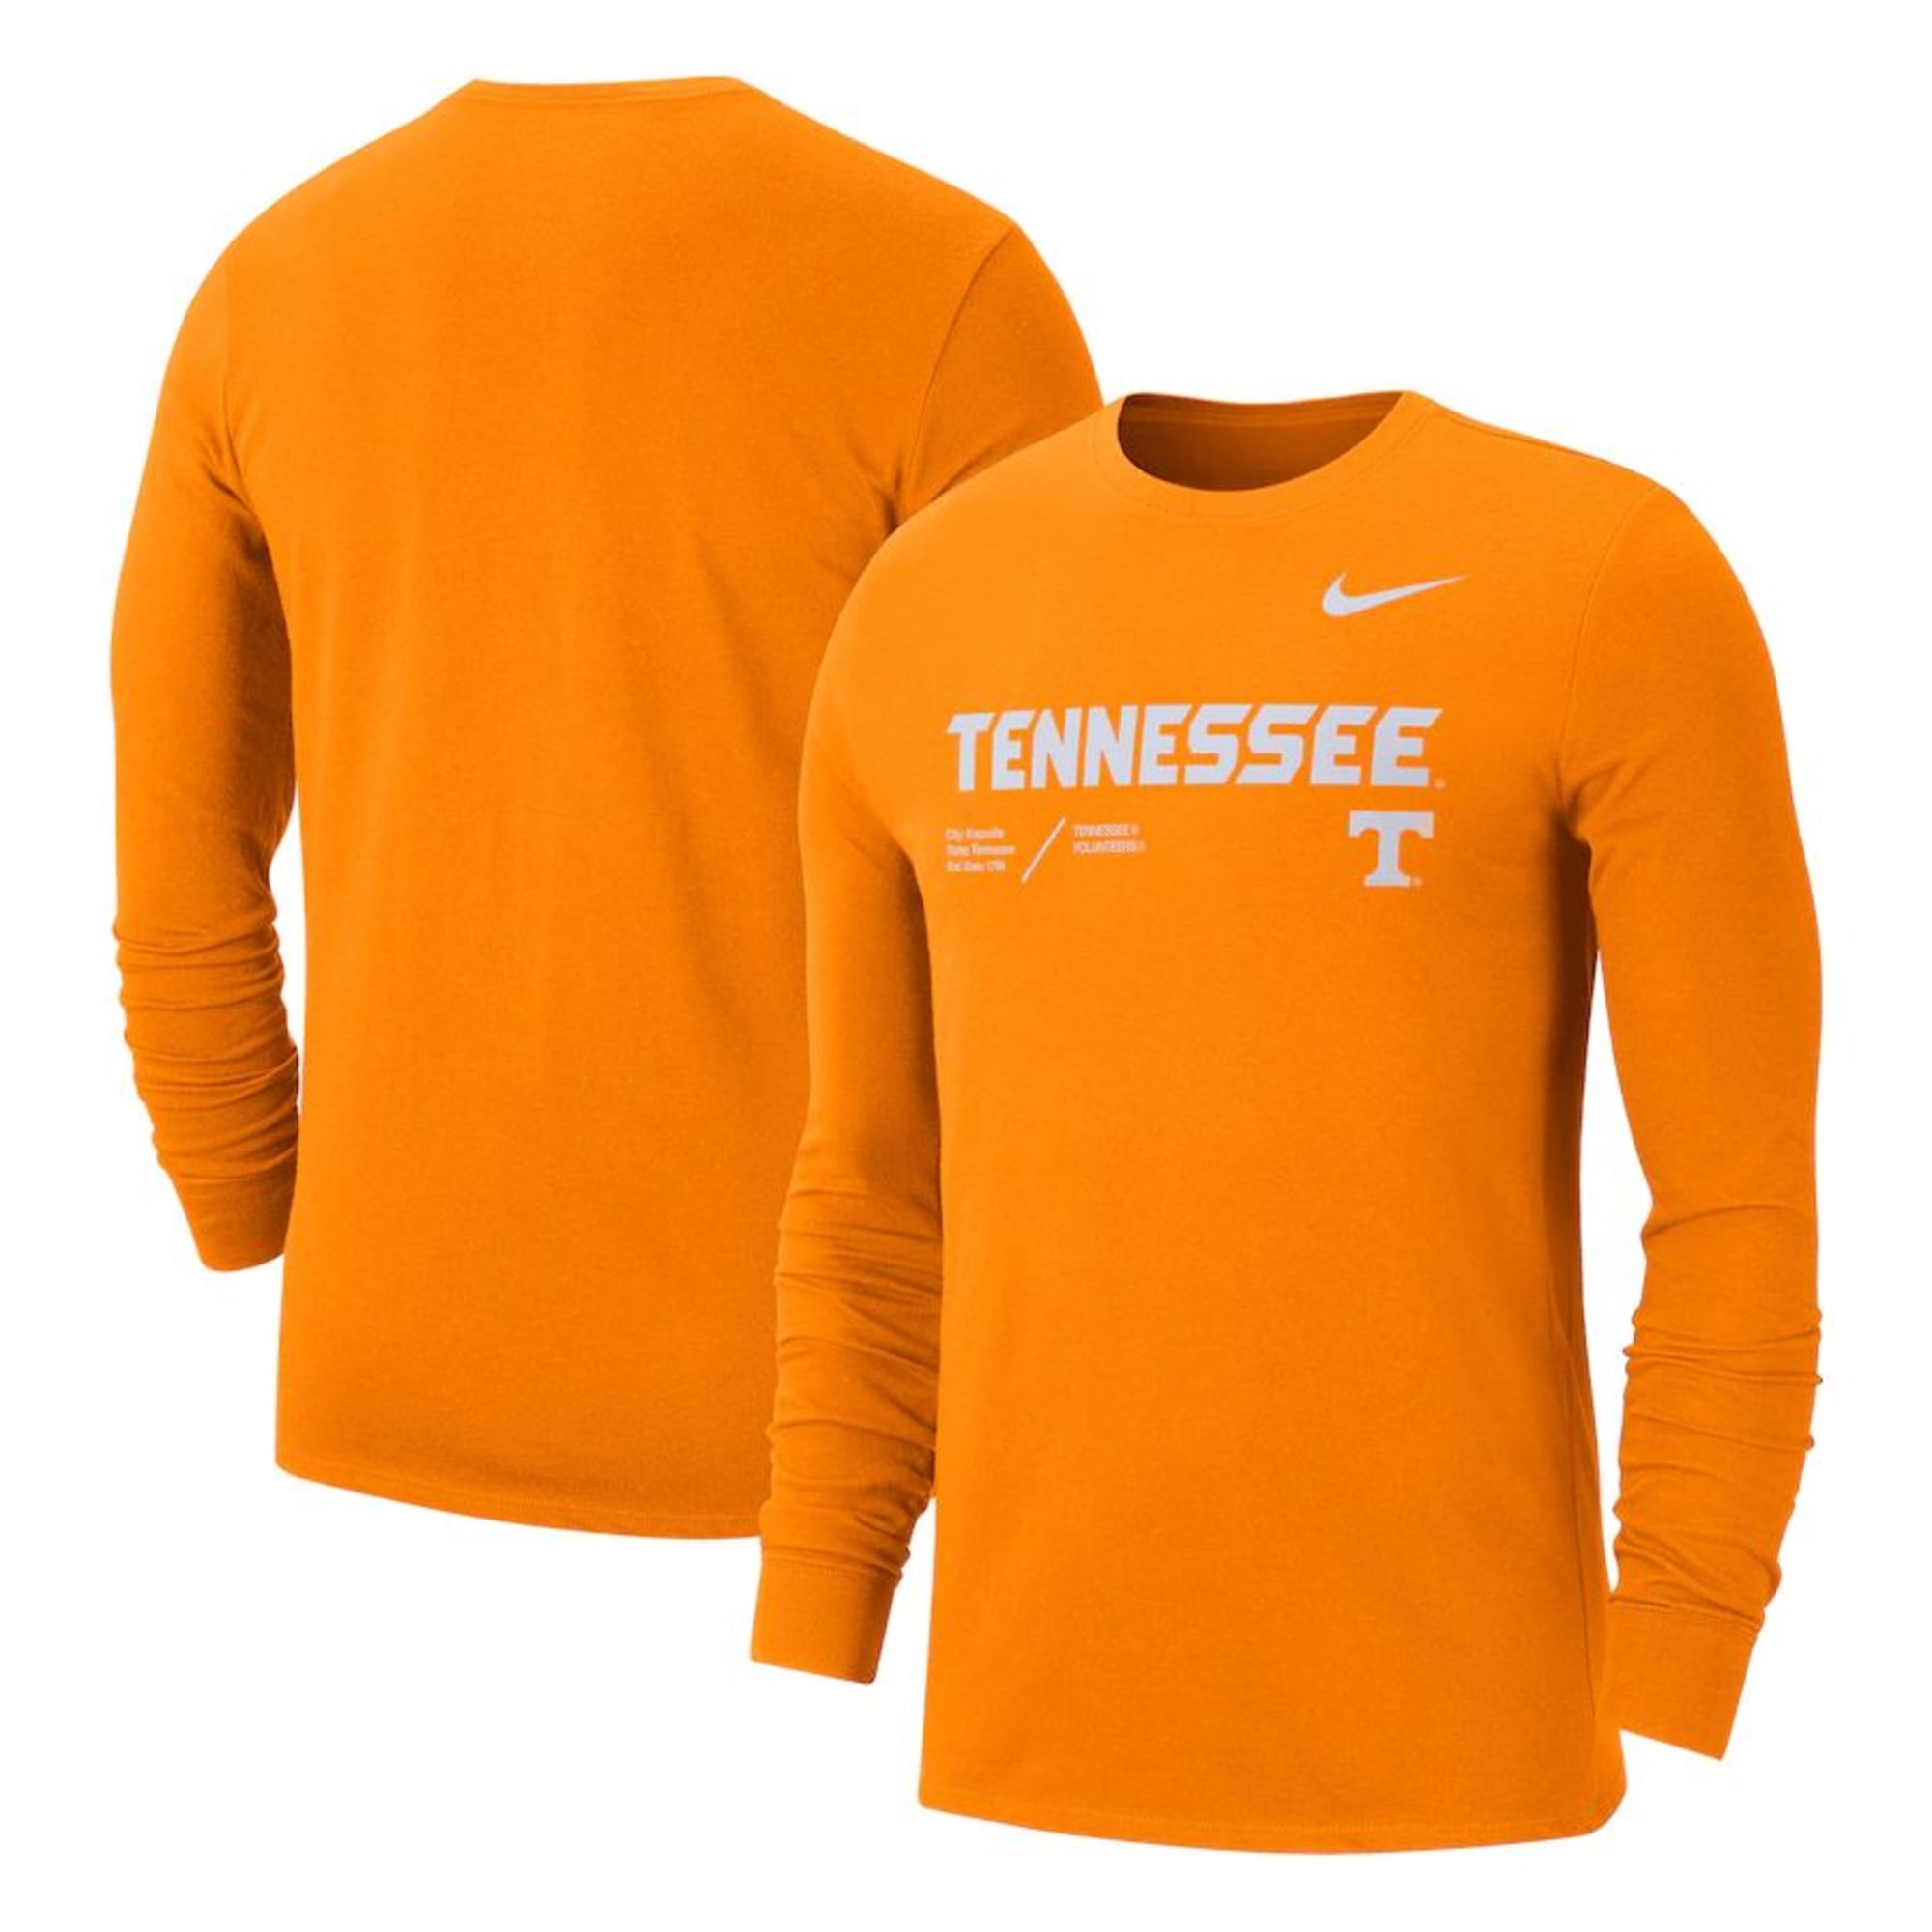 Tennessee Champion Mens Basic Football Tee Shirt - TN_ORG